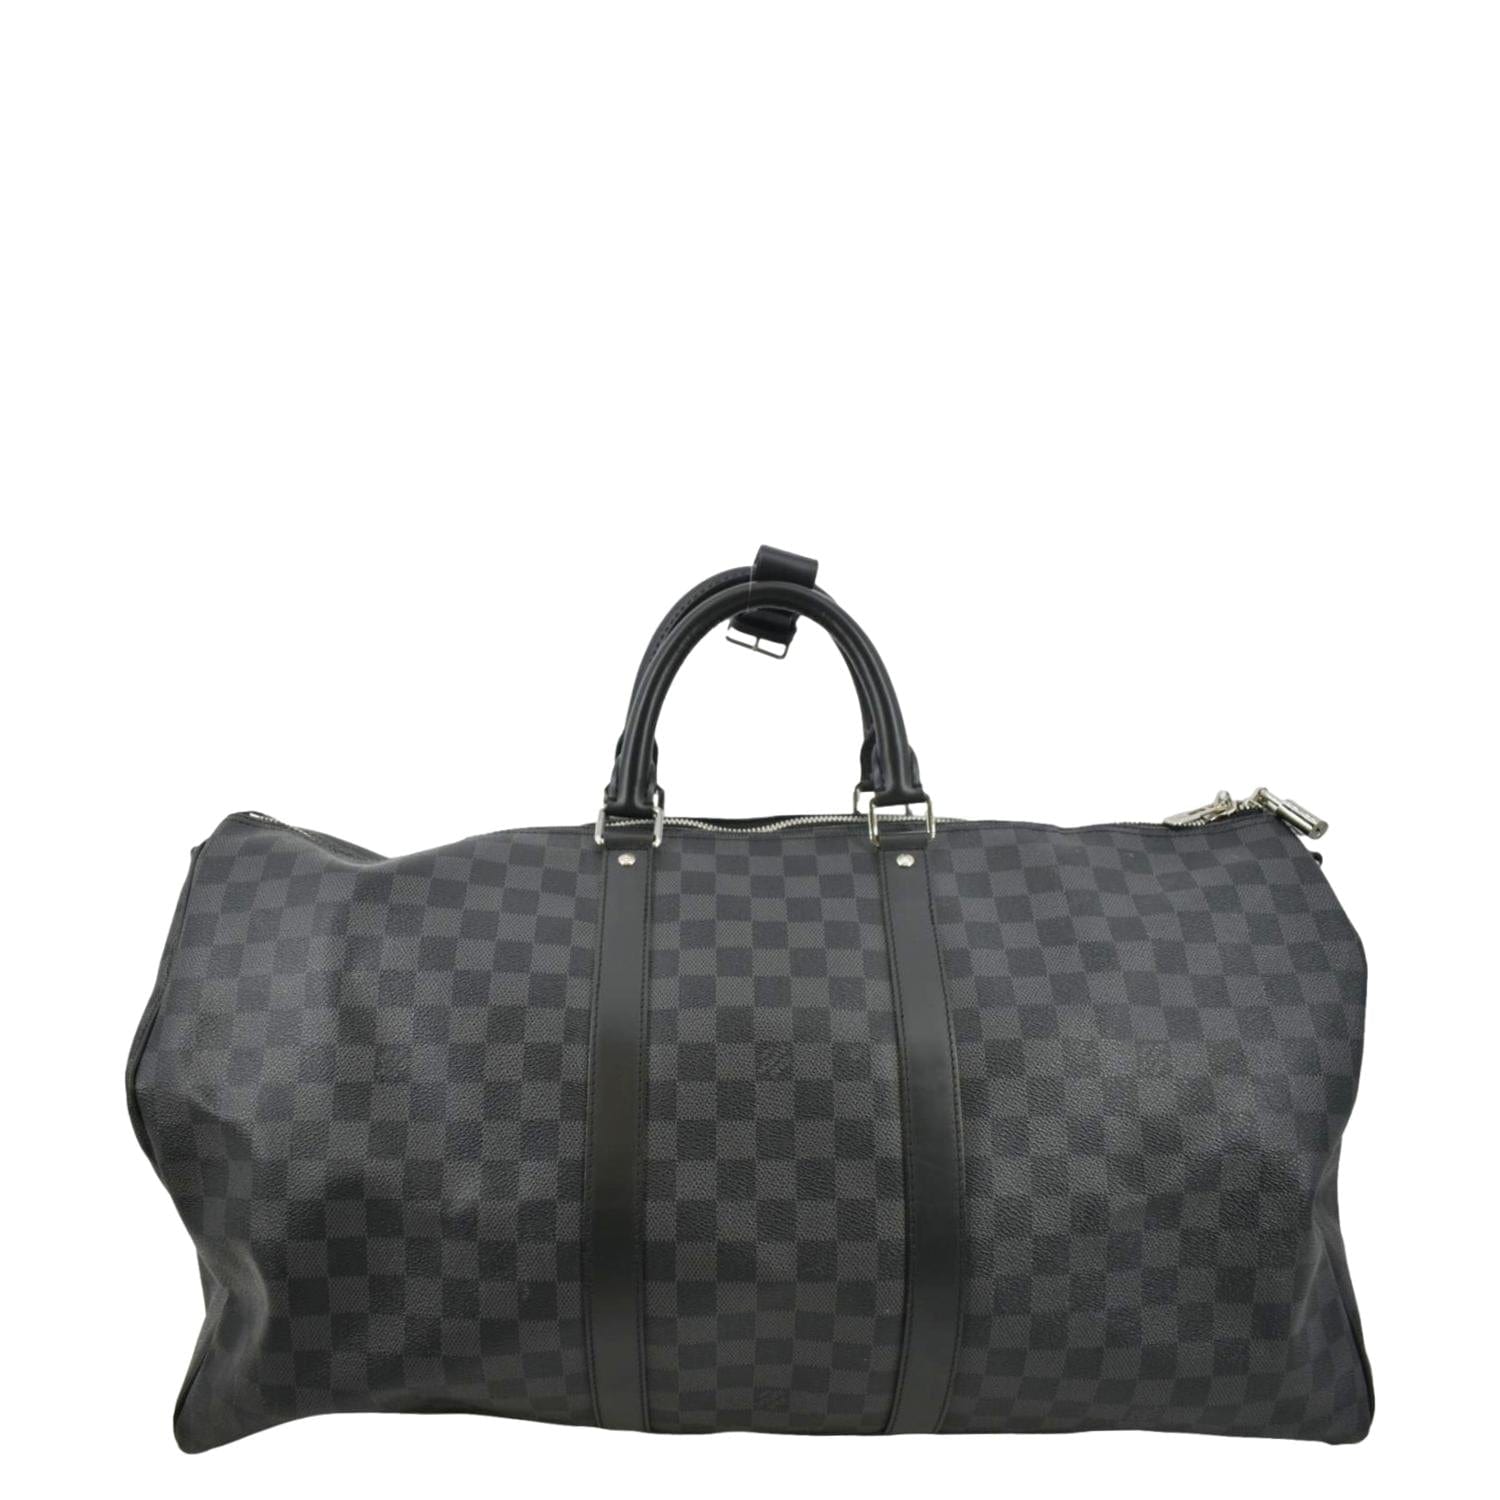 lv travel bag black